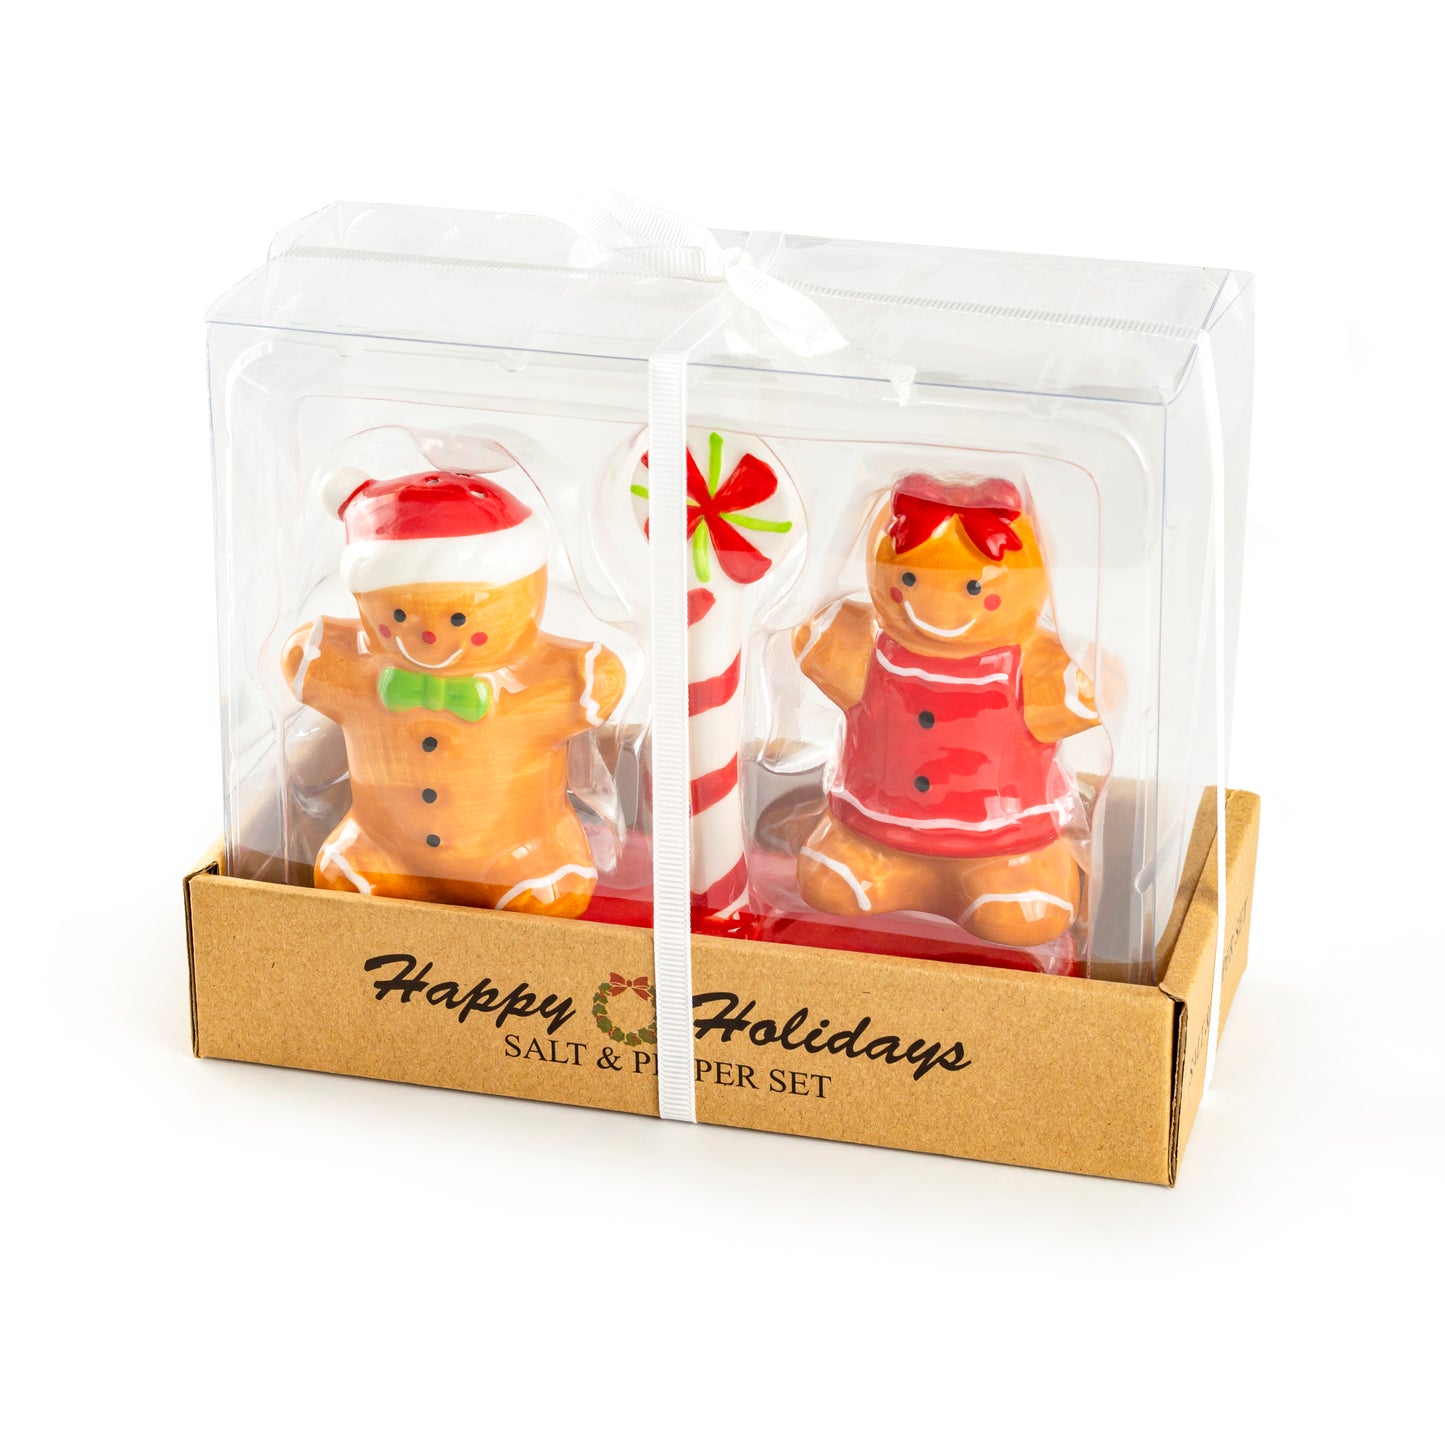 Gift Boxed Gingerbread Figurine Salt and Pepper Shaker Set Potter's Studio